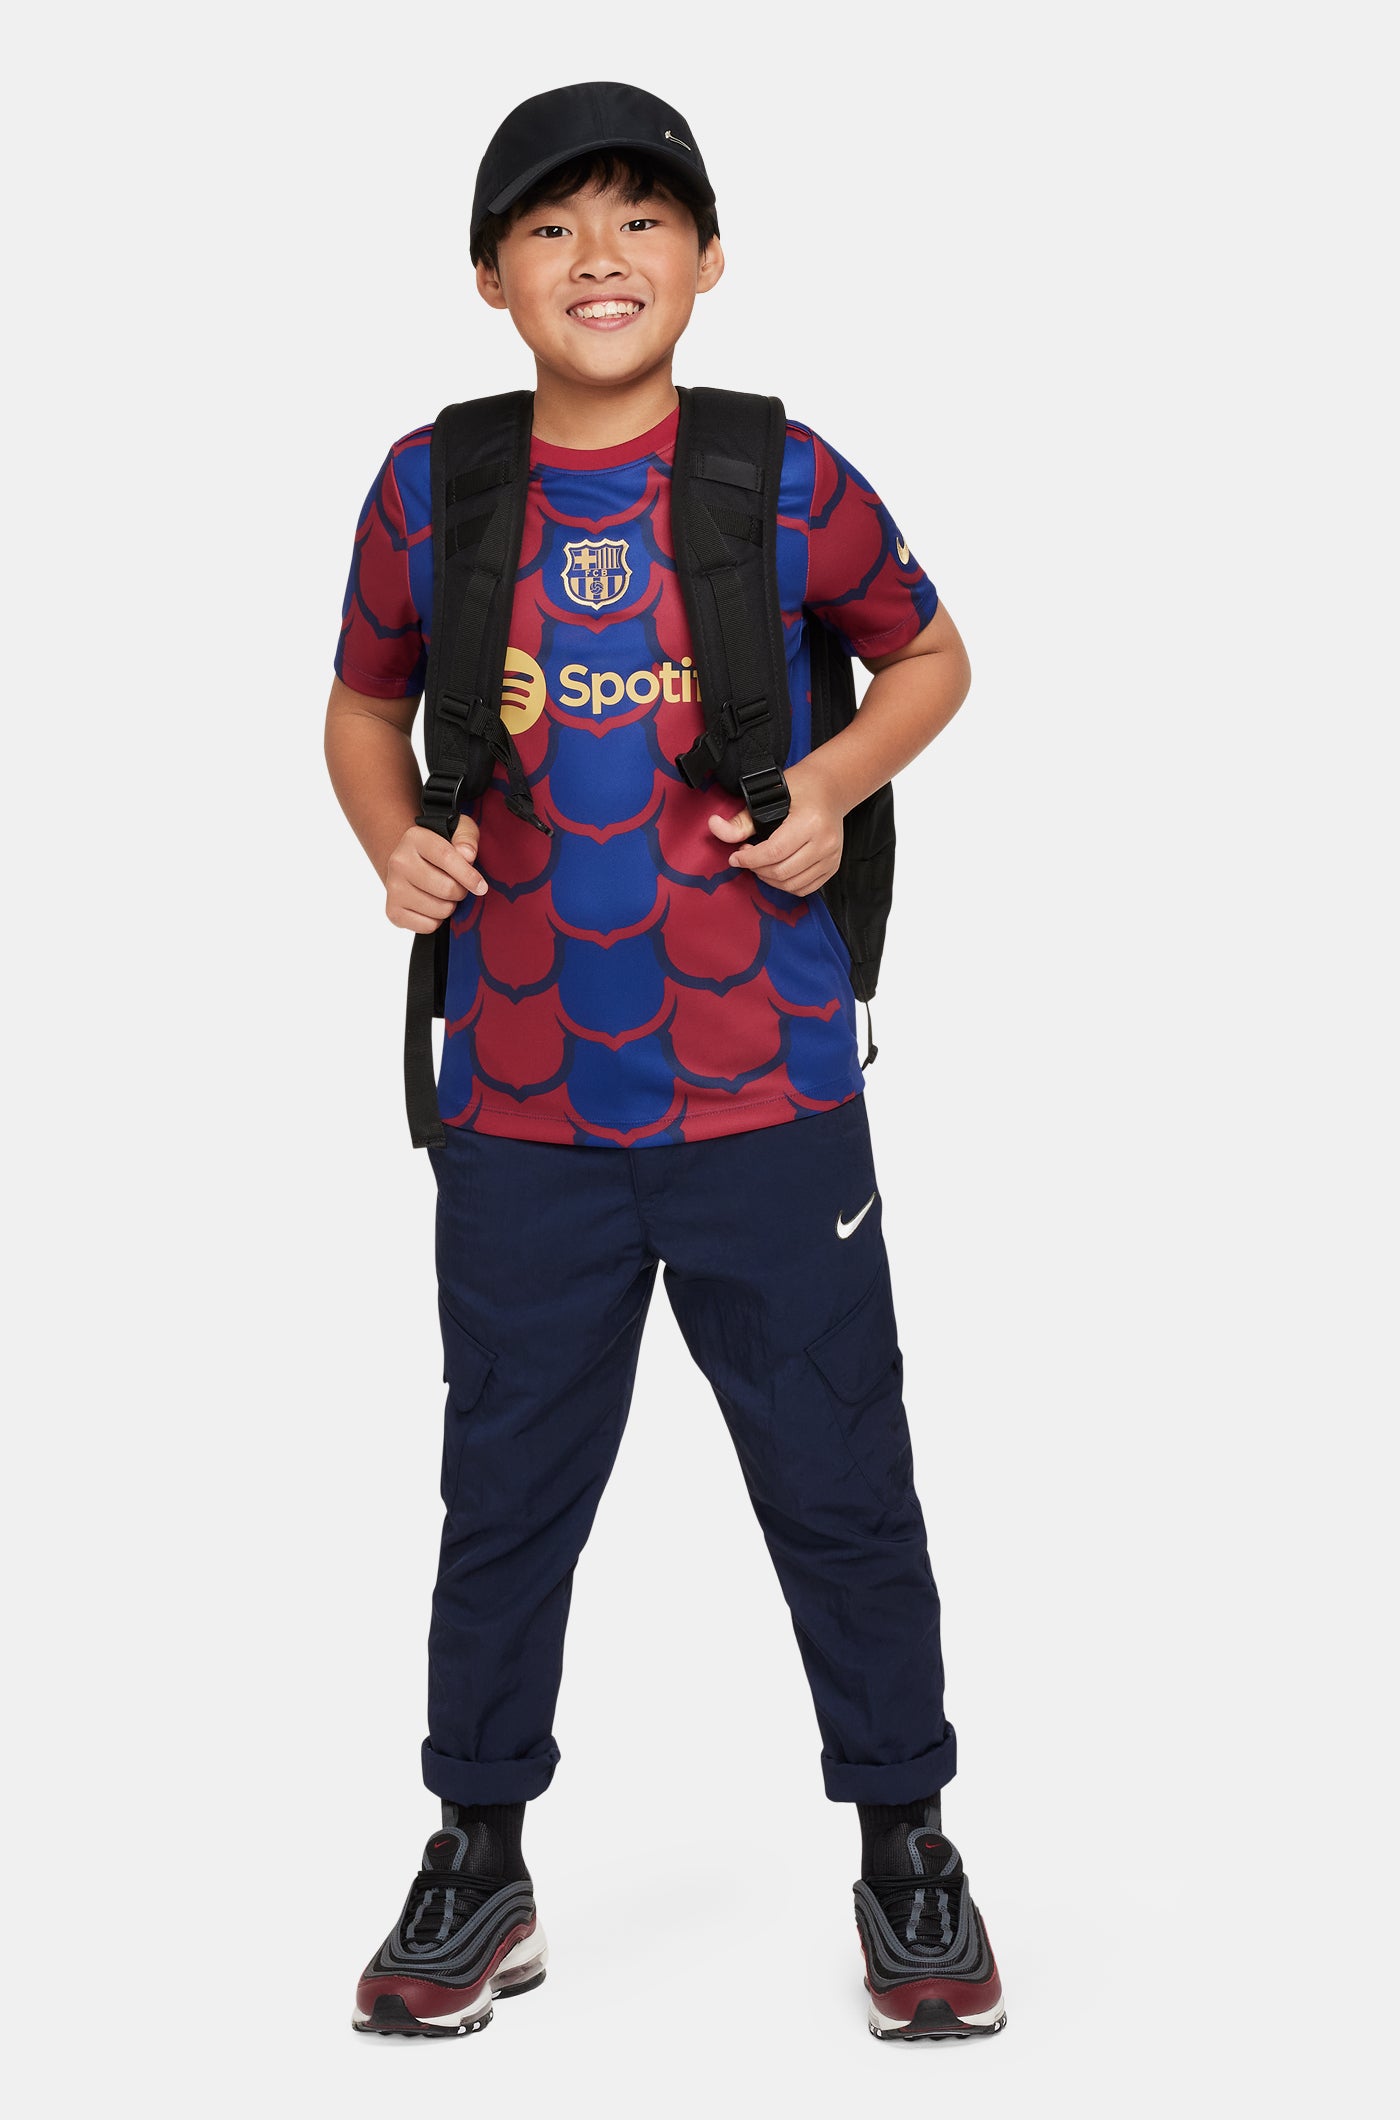 Camiseta Pre-Partido FC Barcelona blaugrana - Junior